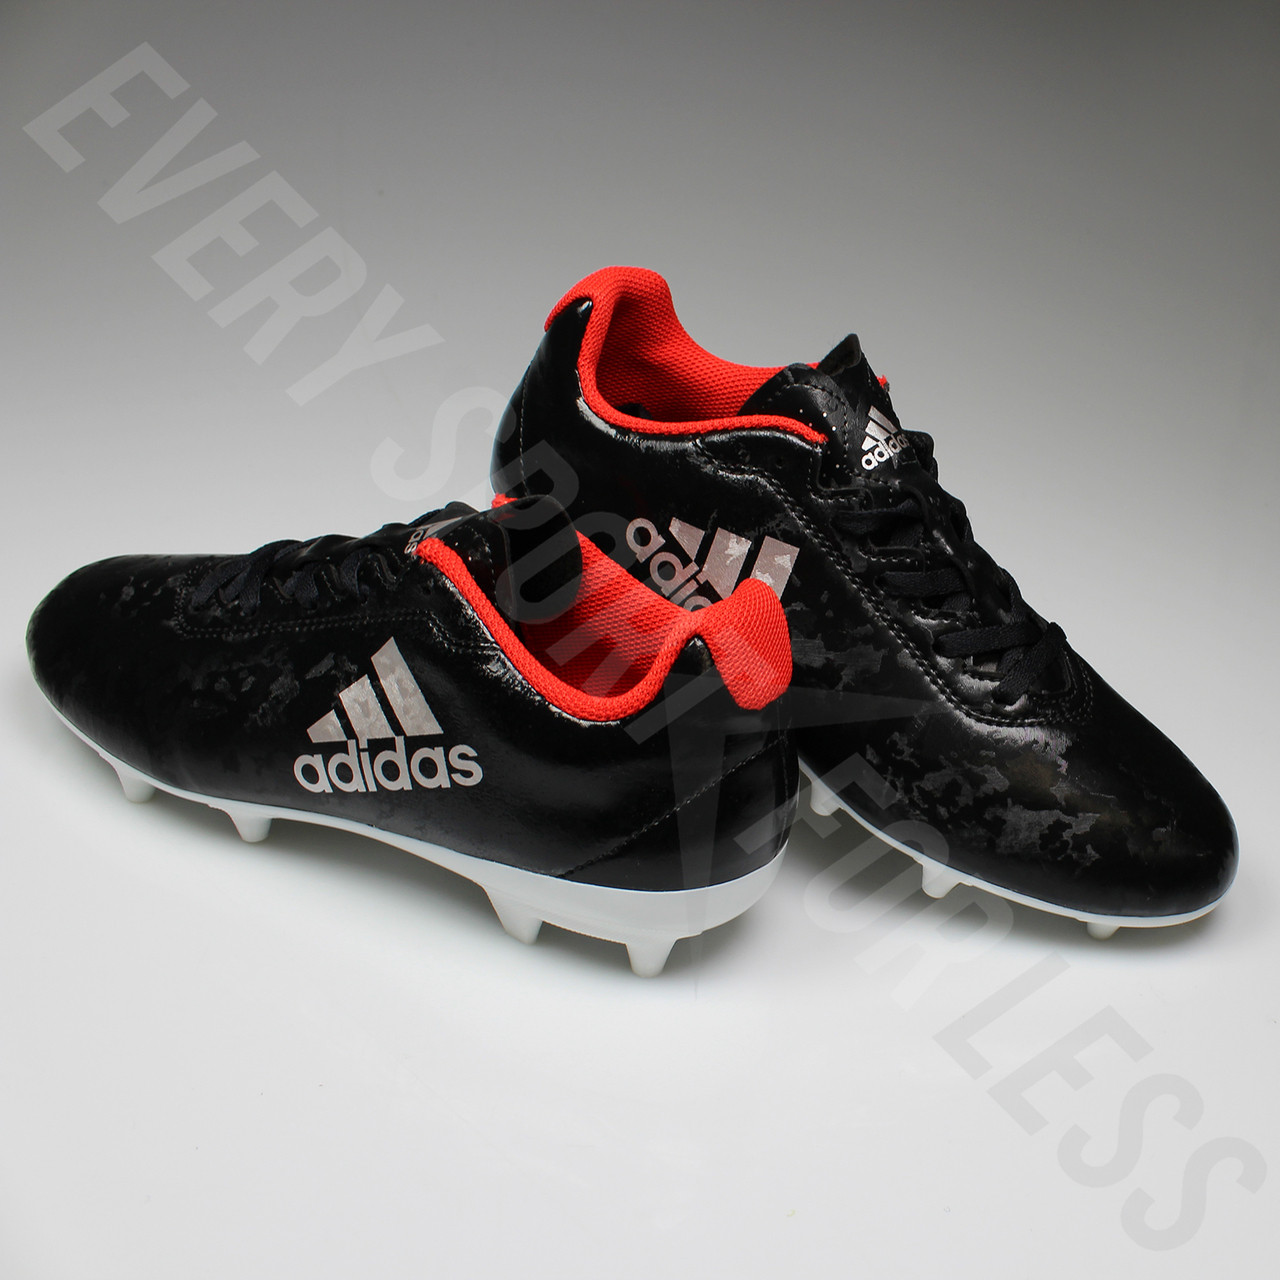 adidas women's x 17.4 fg soccer cleats